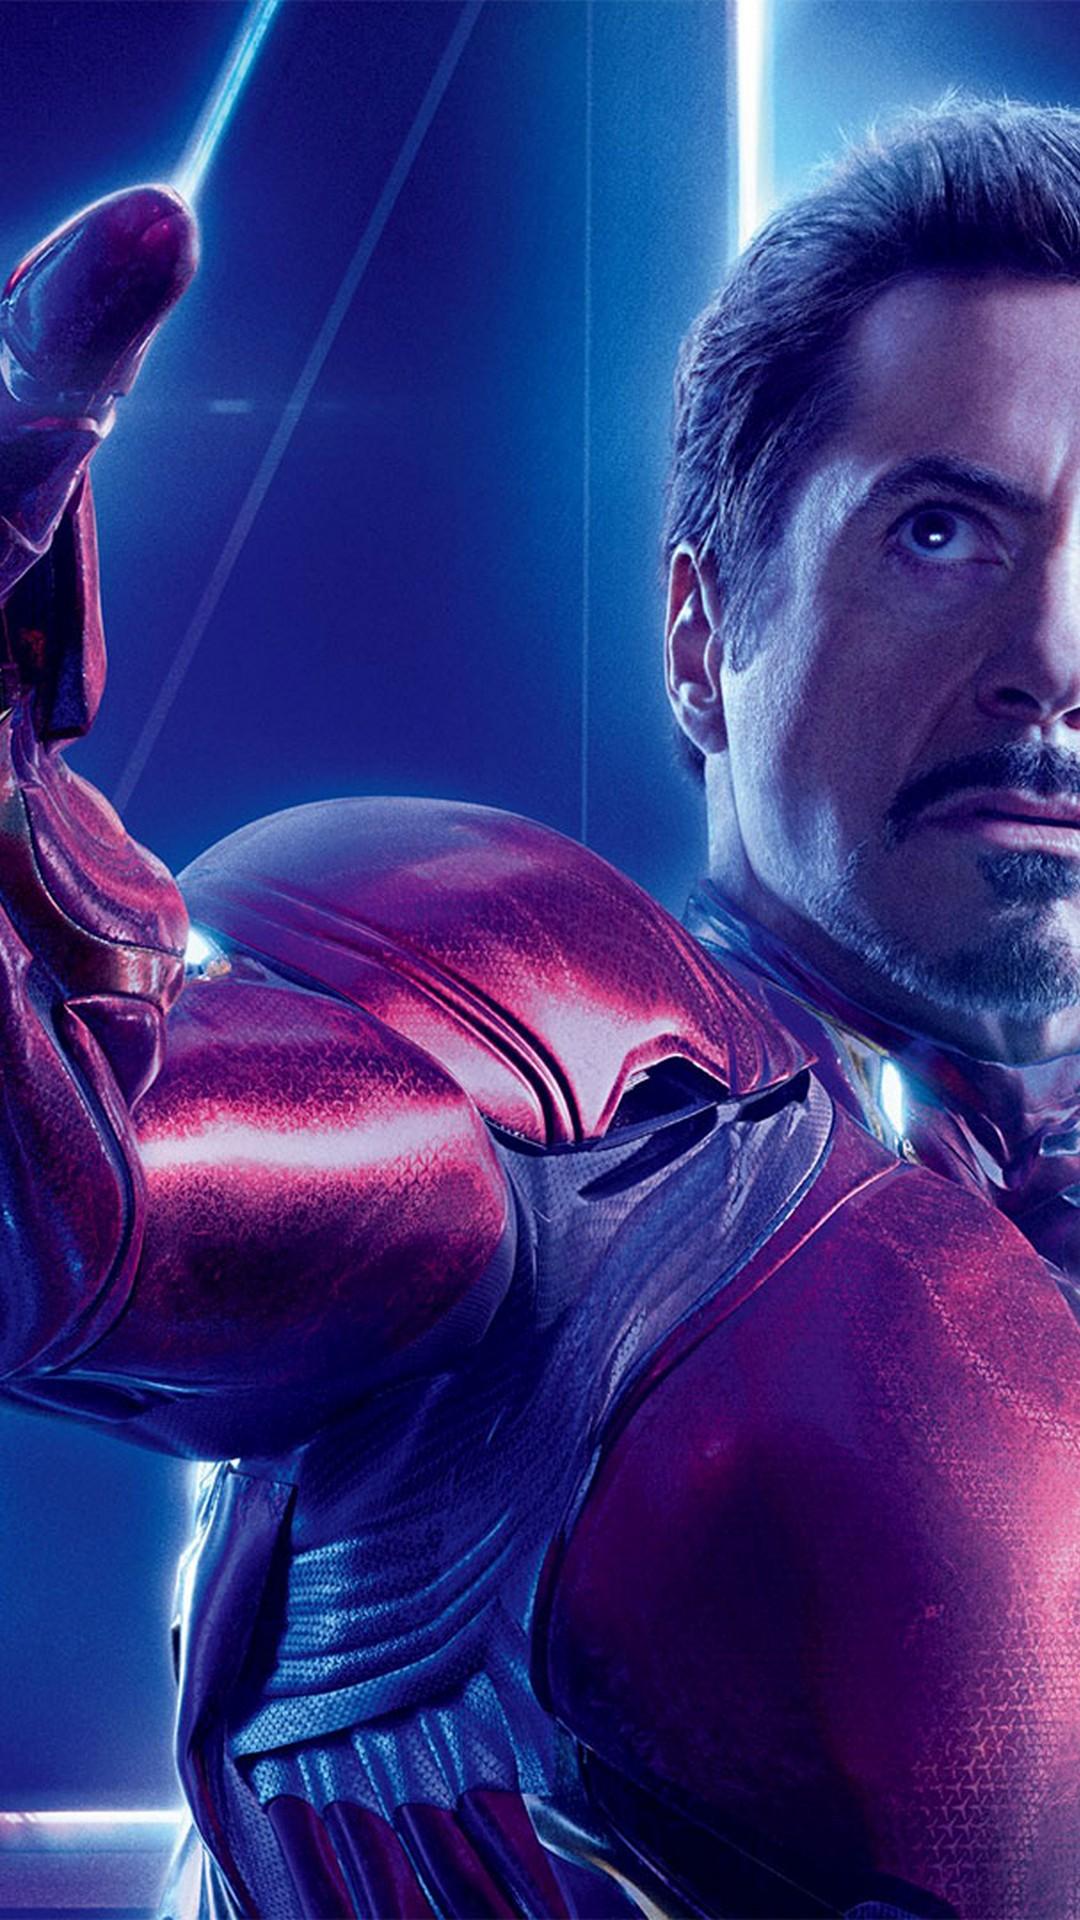 Iron Man Avengers Endgame iPhone Wallpaper Movie Poster